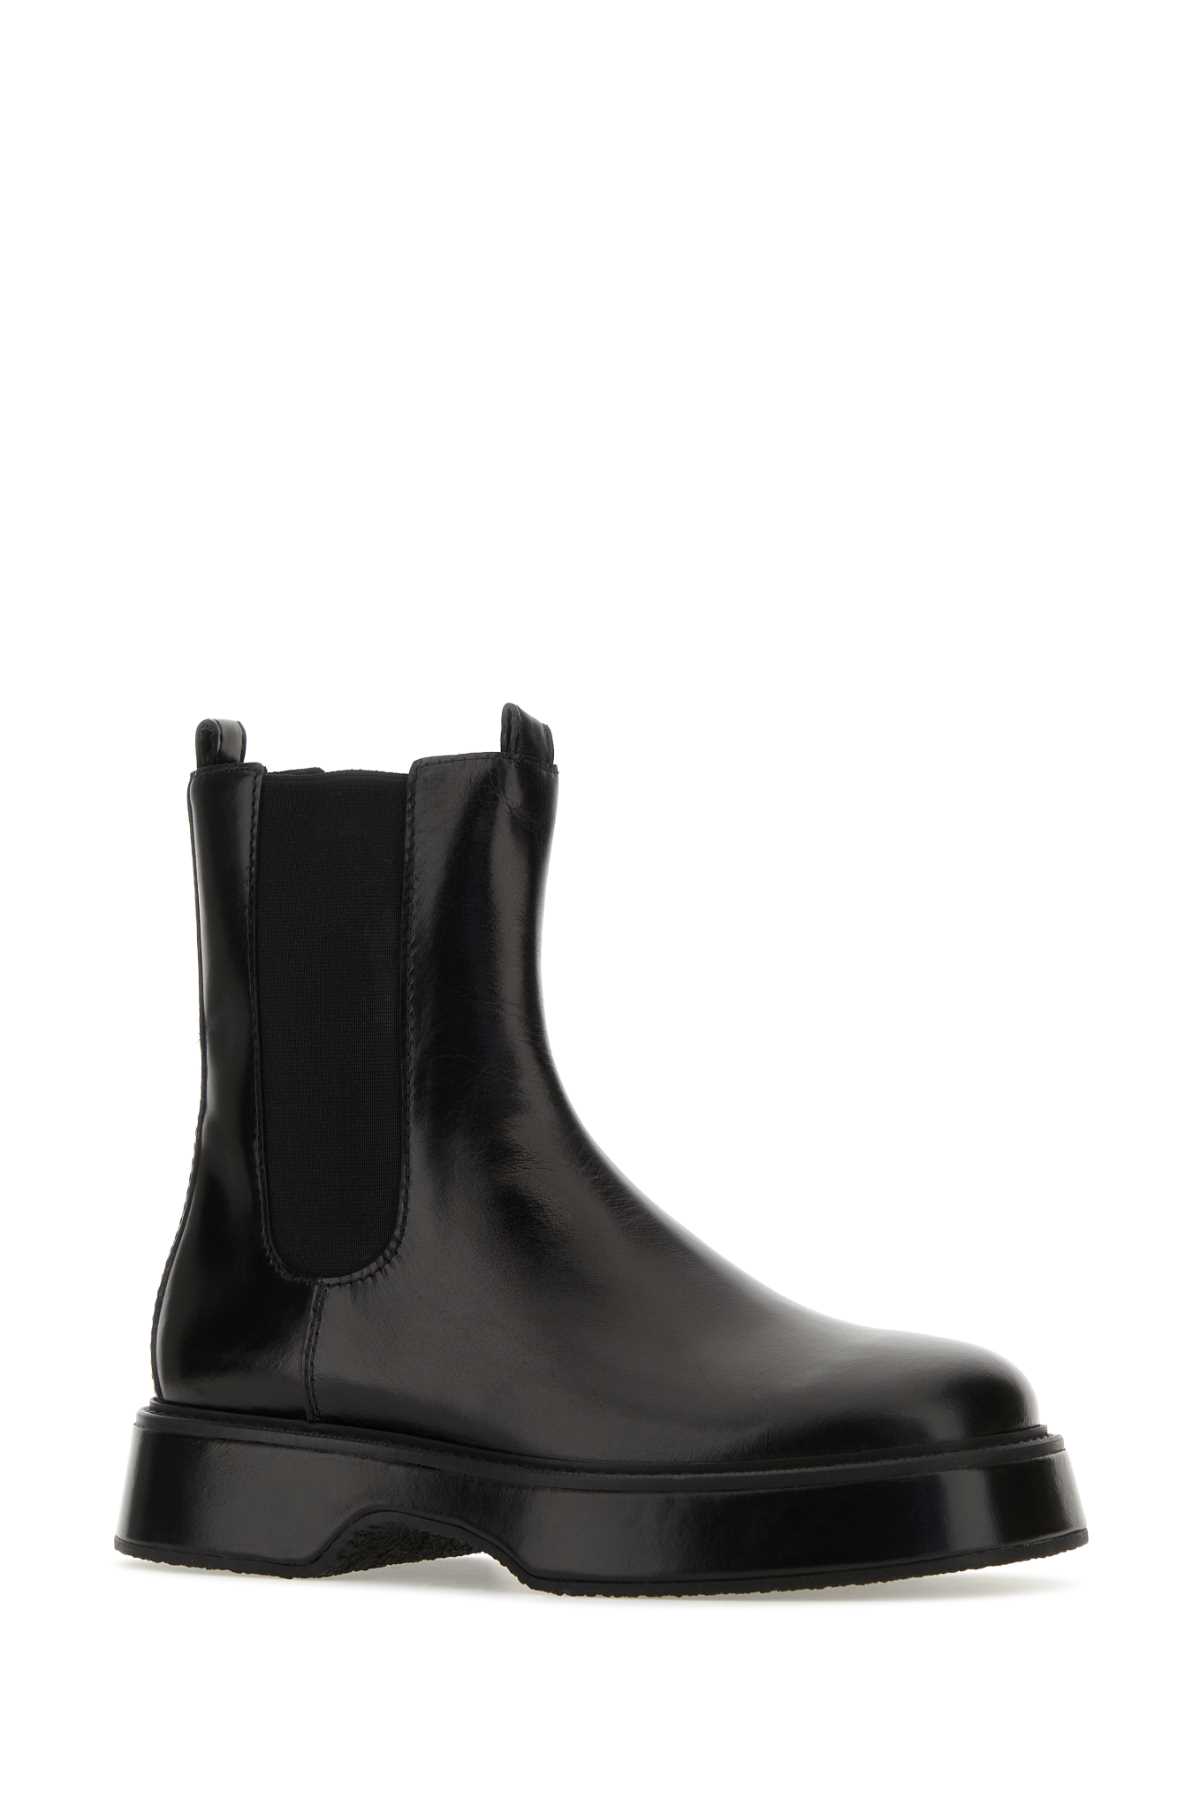 Ami Alexandre Mattiussi Black Leather Ankle Boots